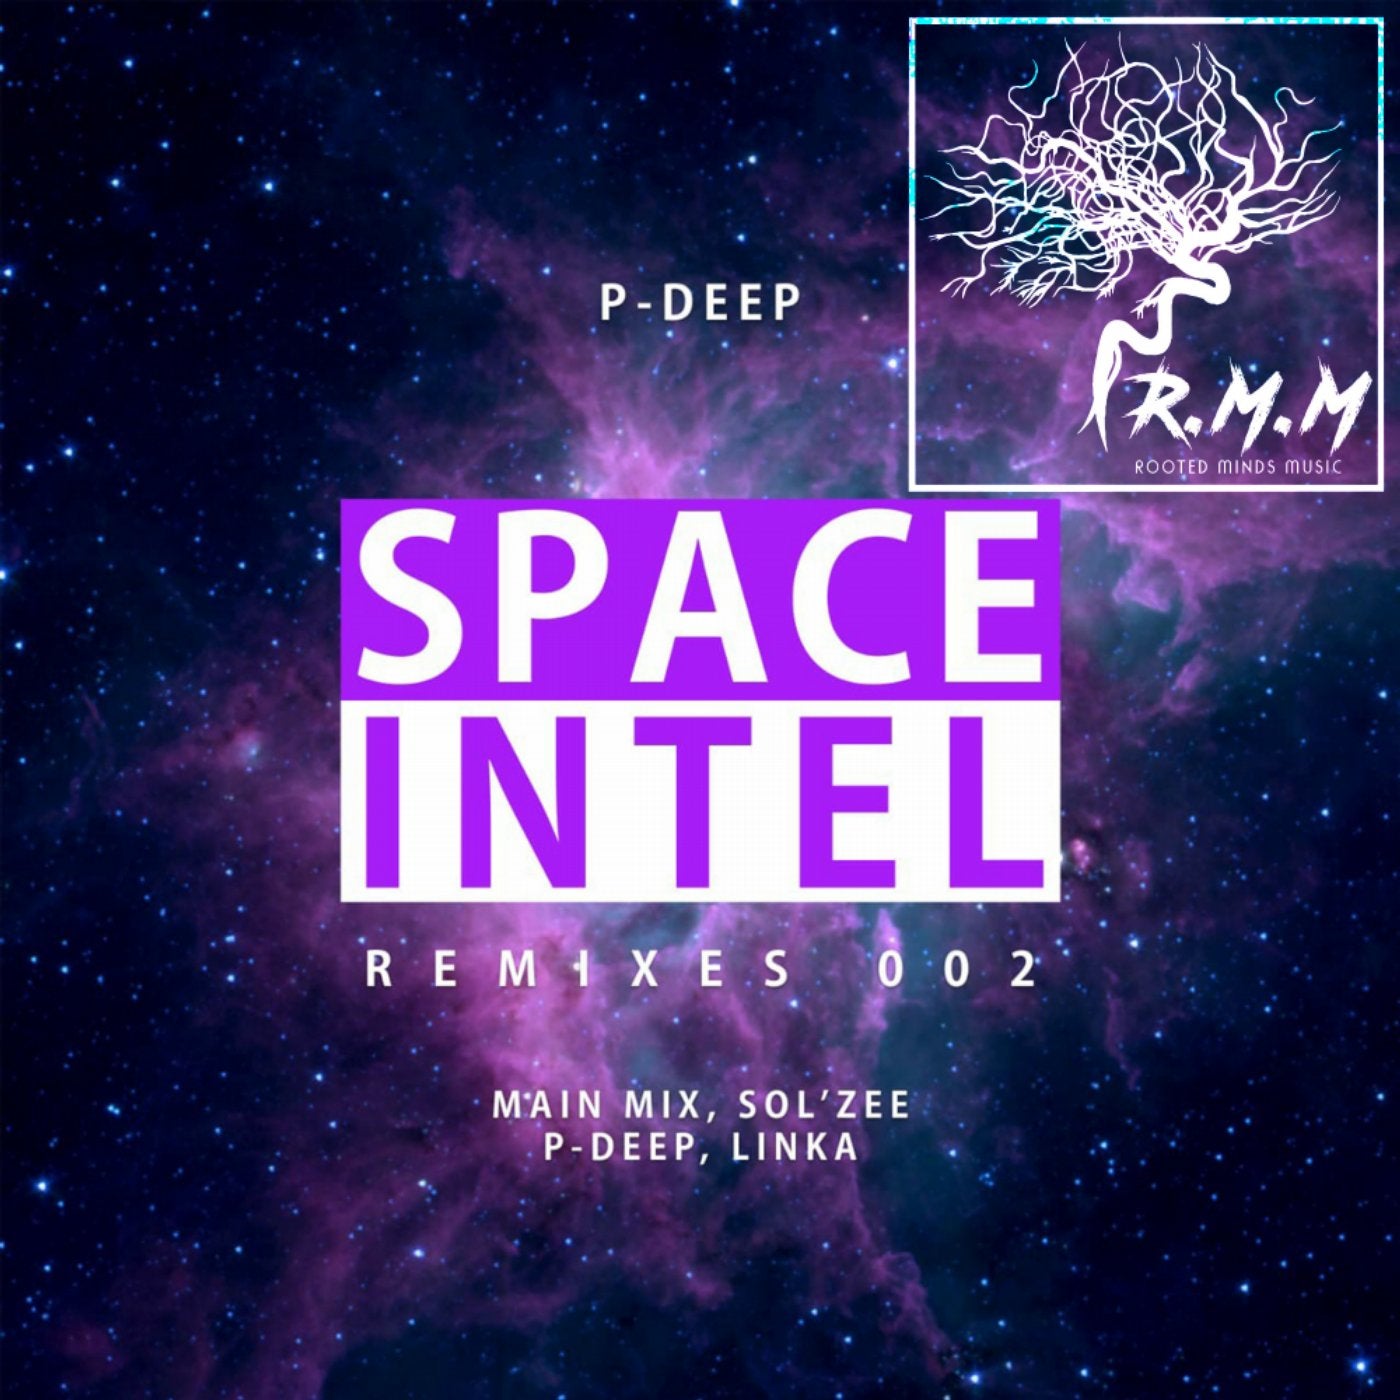 Space Intel Remixes 002